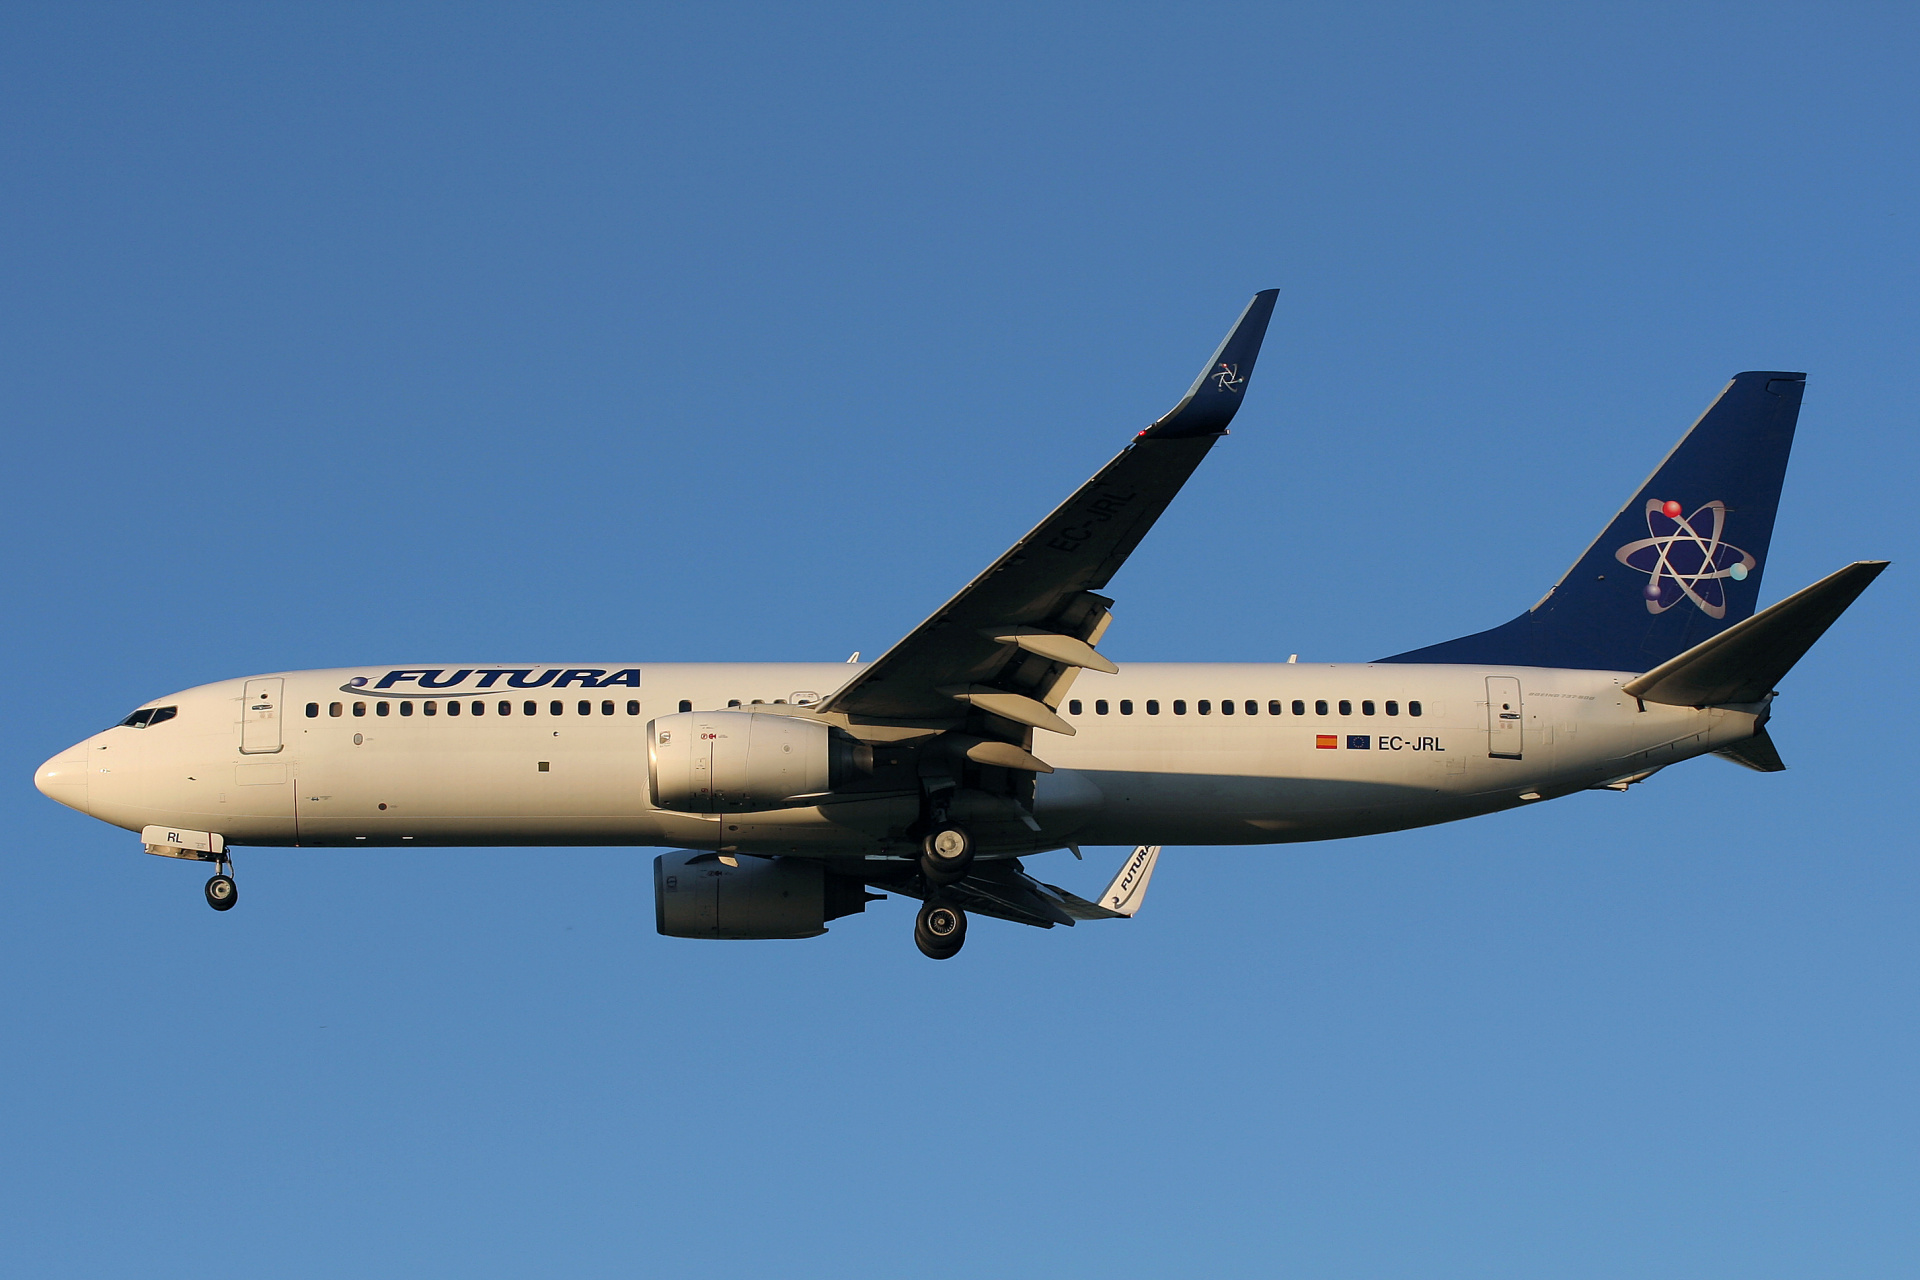 EC-JRL, Futura International Airlines (Aircraft » EPWA Spotting » Boeing 737-800)